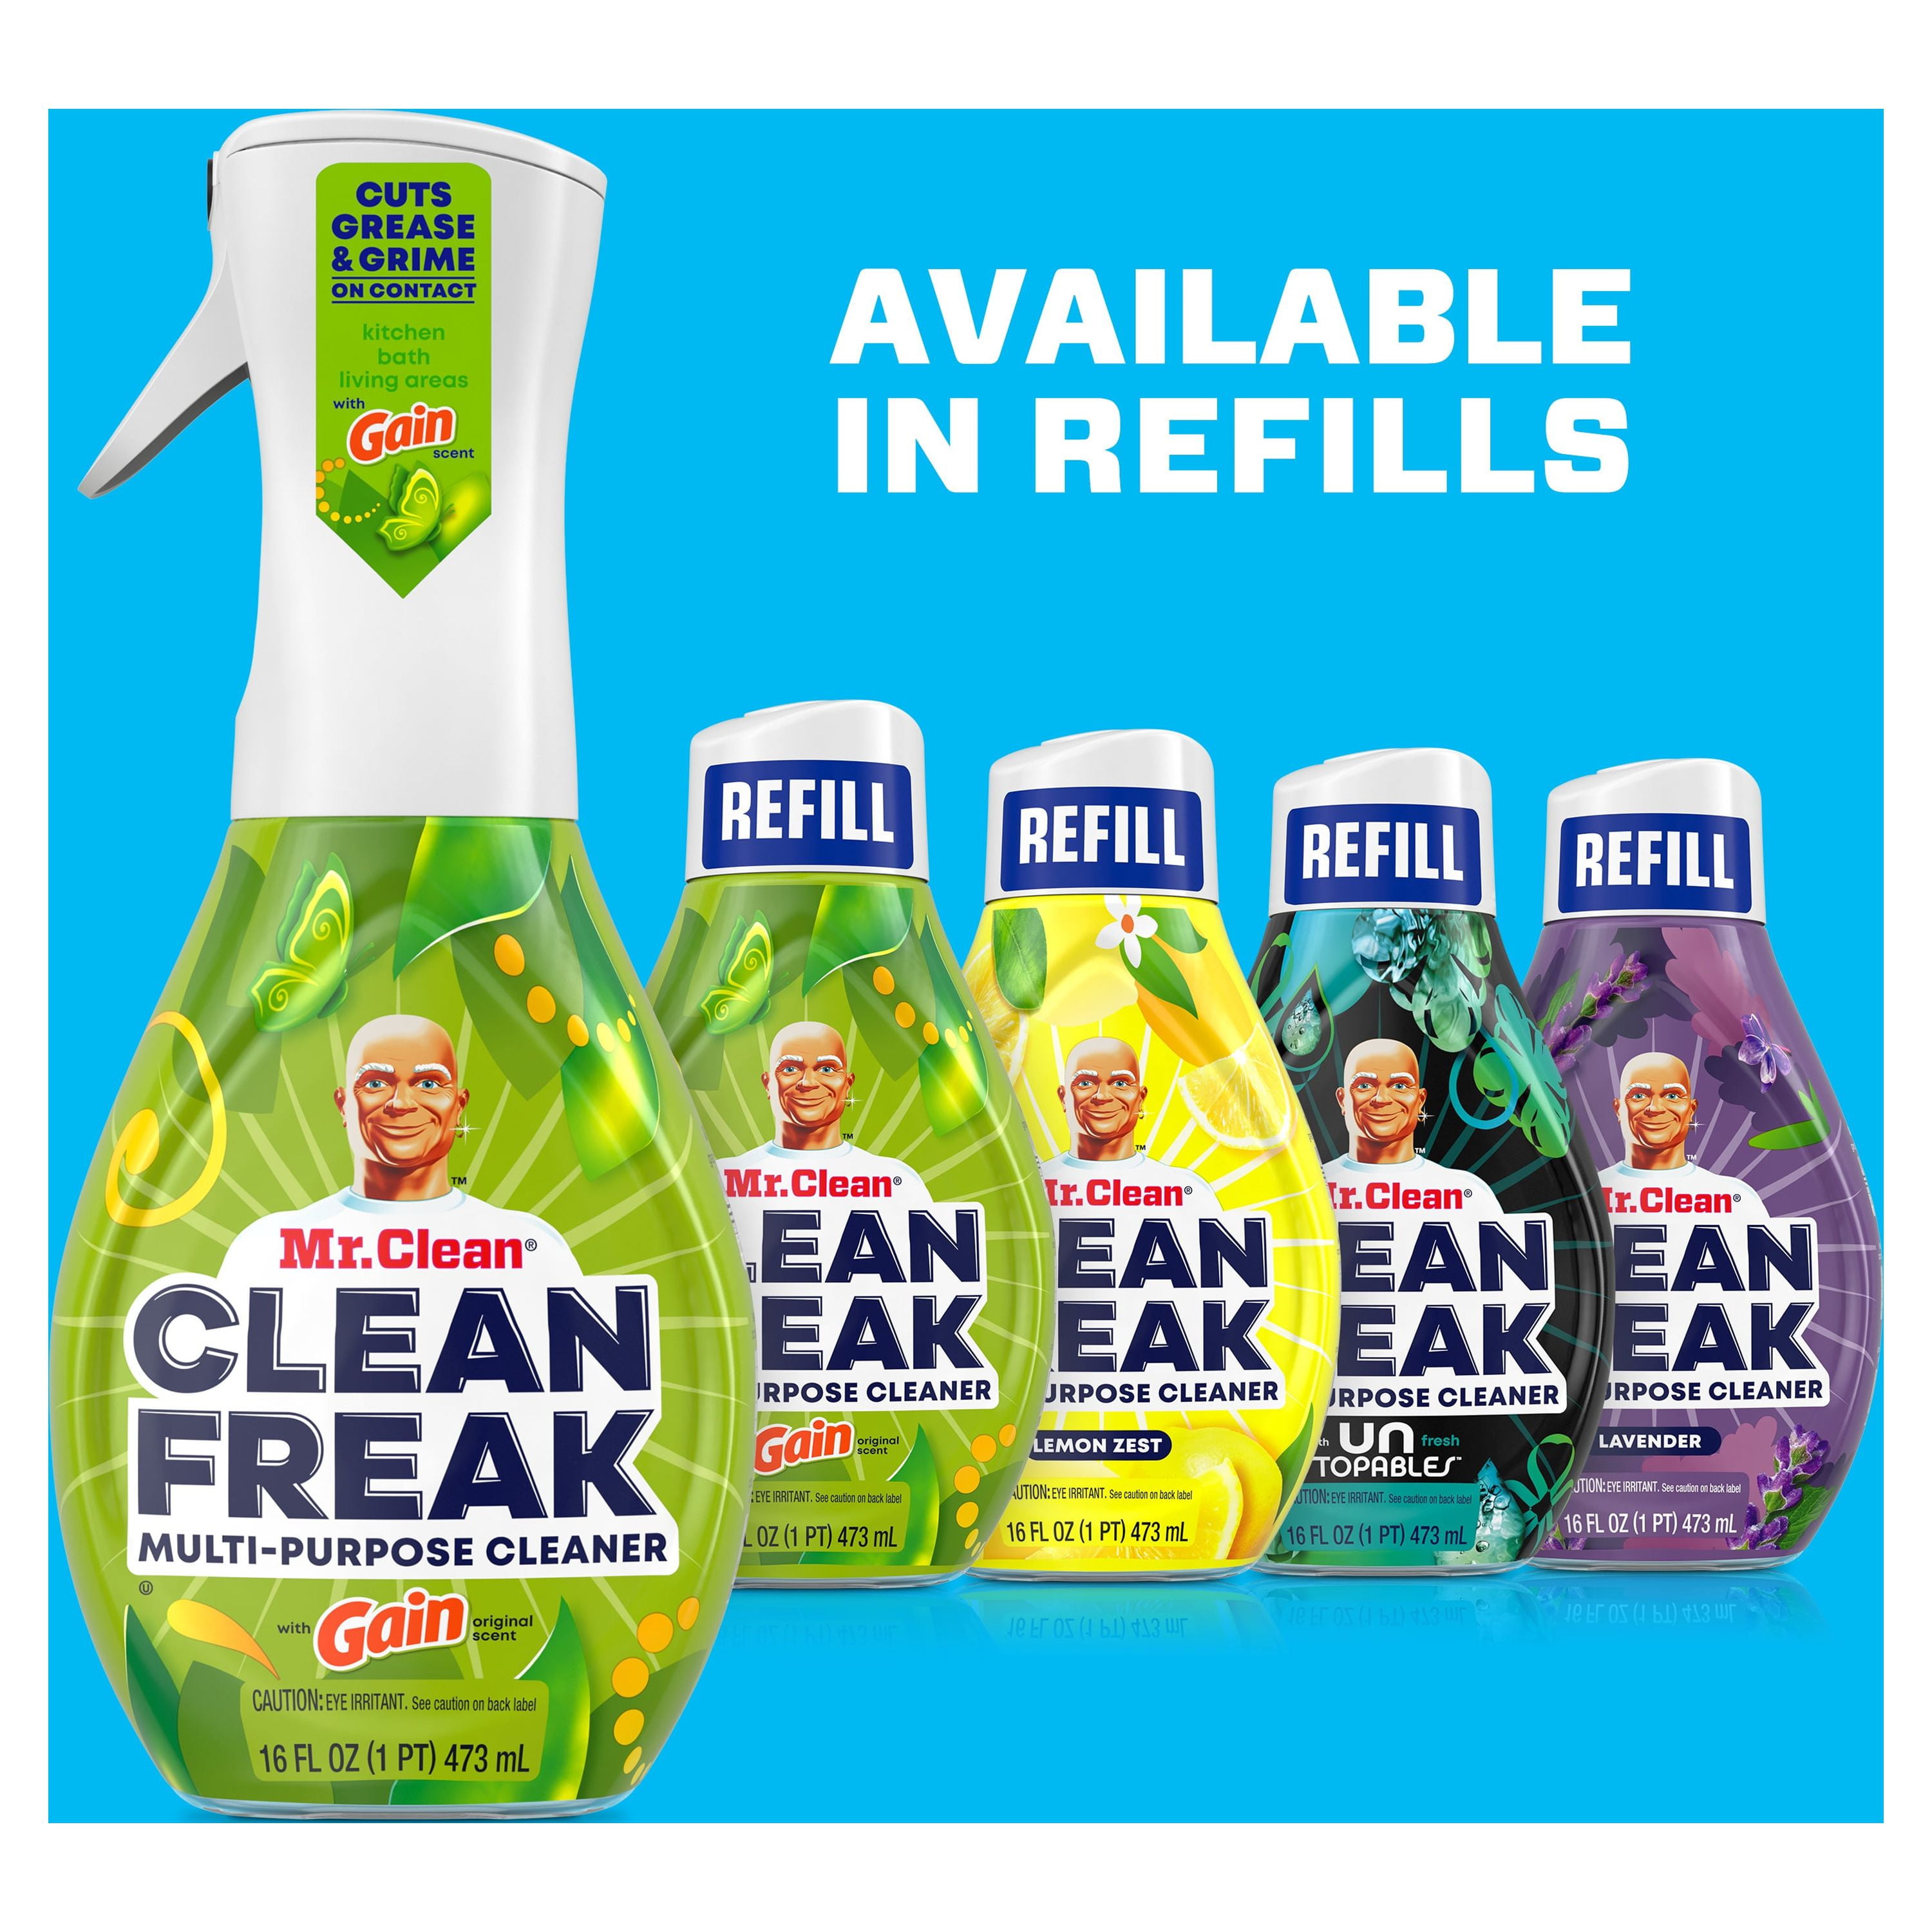 Mr. Clean Clean Freak 16-fl oz Fresh Scent Mist All-Purpose Cleaner in the  All-Purpose Cleaners department at